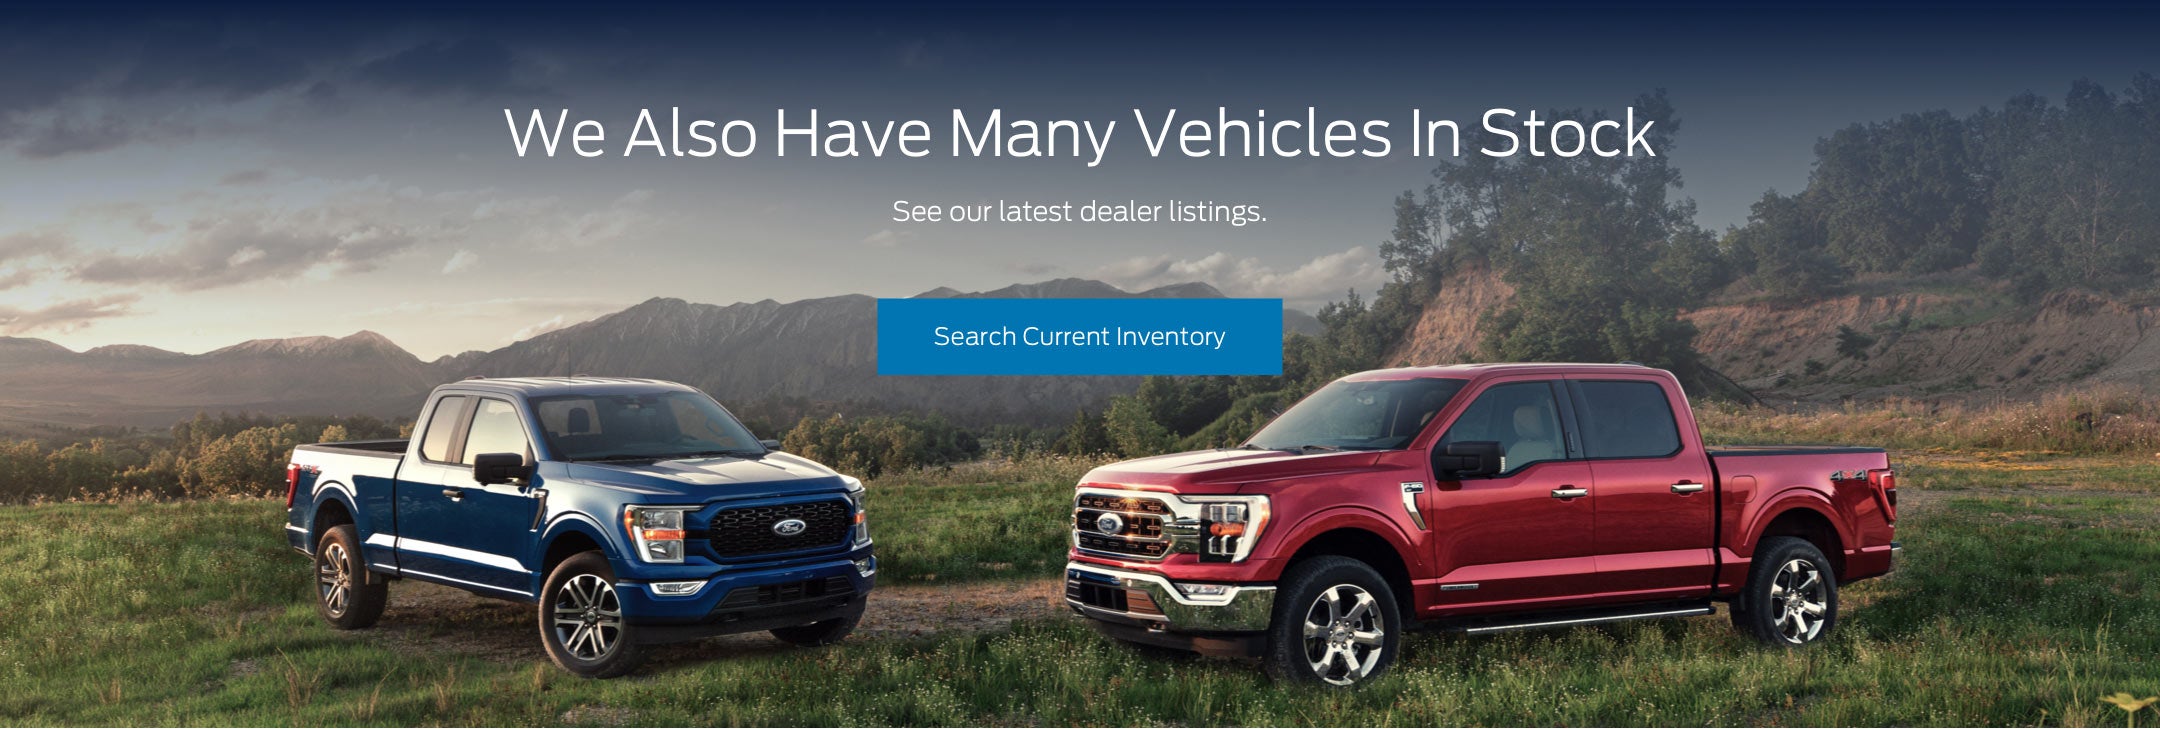 Ford vehicles in stock | Glenwood Springs Ford, Inc. in Glenwood Springs CO